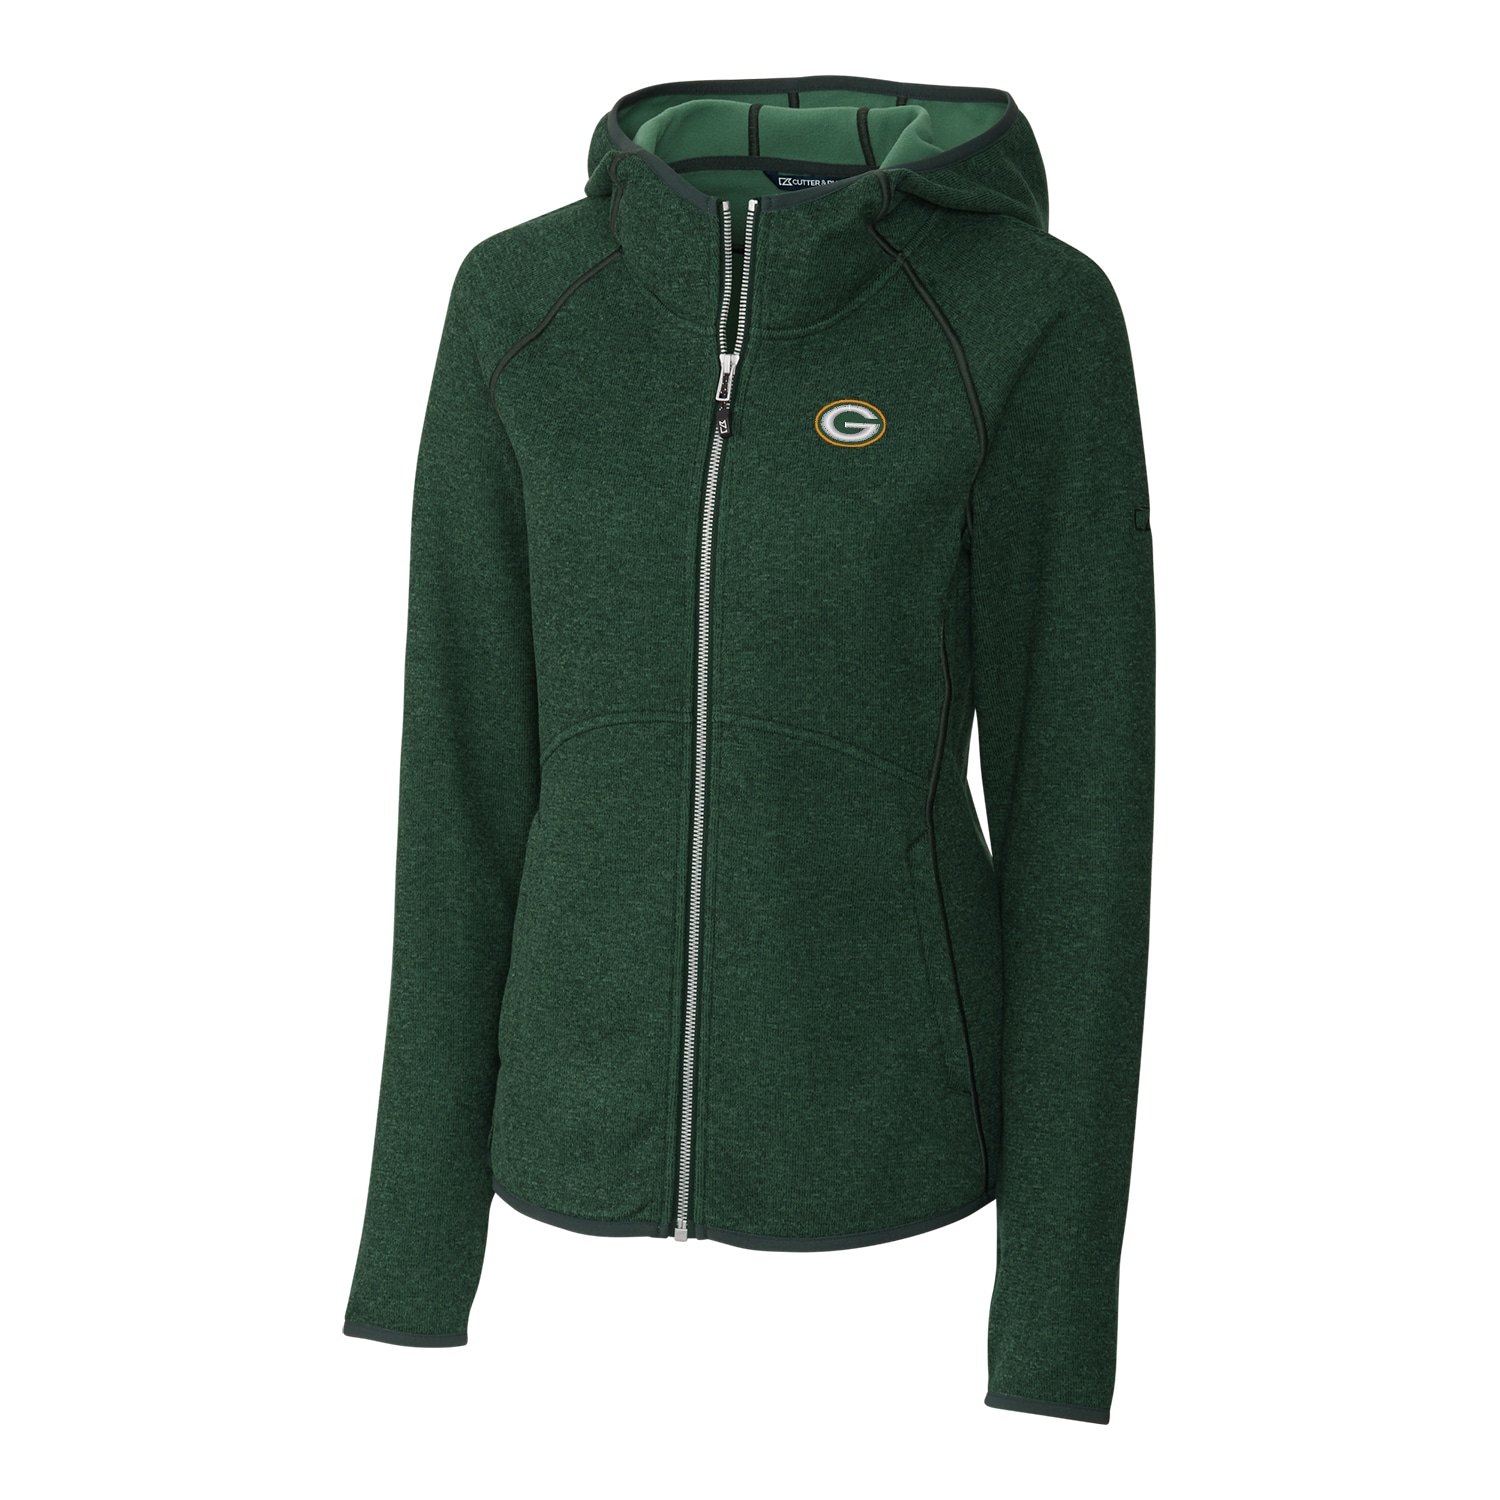 Women's Cutter & Buck Green Green Bay Packers Mainsail Full-Zip Jacket - image 1 of 1